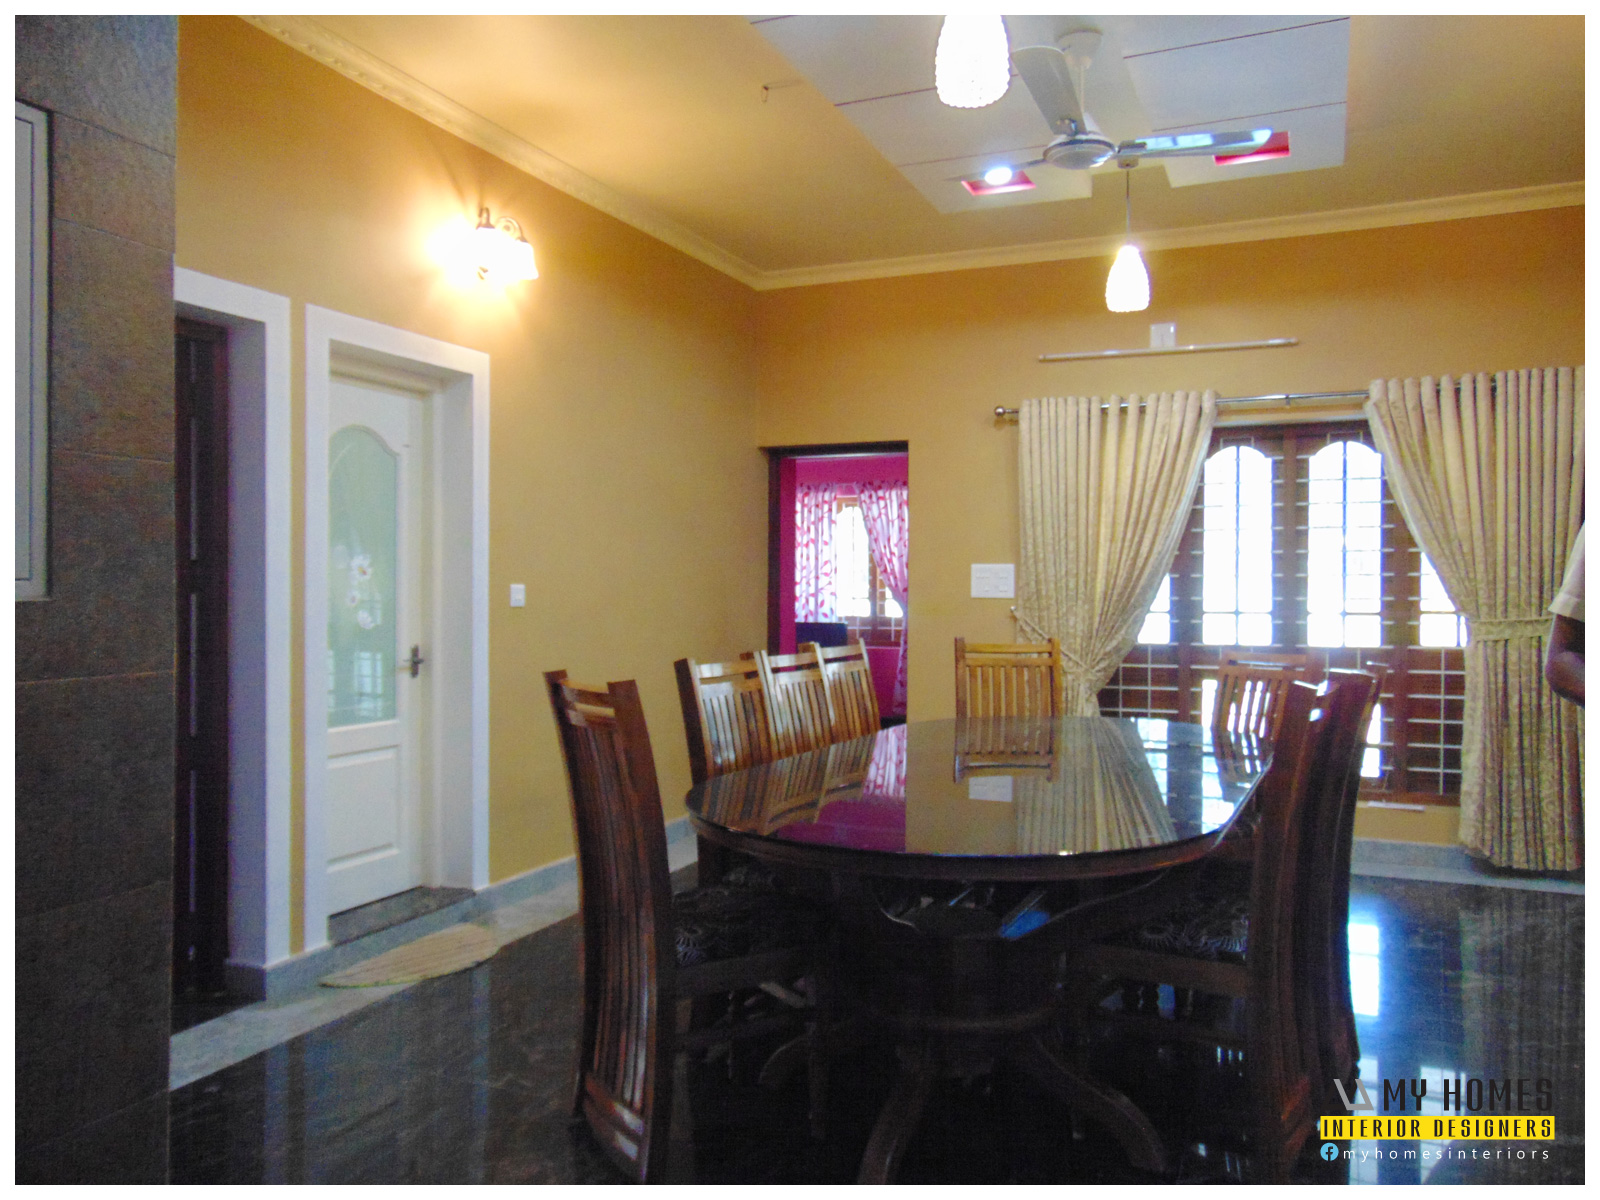 Top Dining Room Designs Kerala From Interior Designer Thrissur